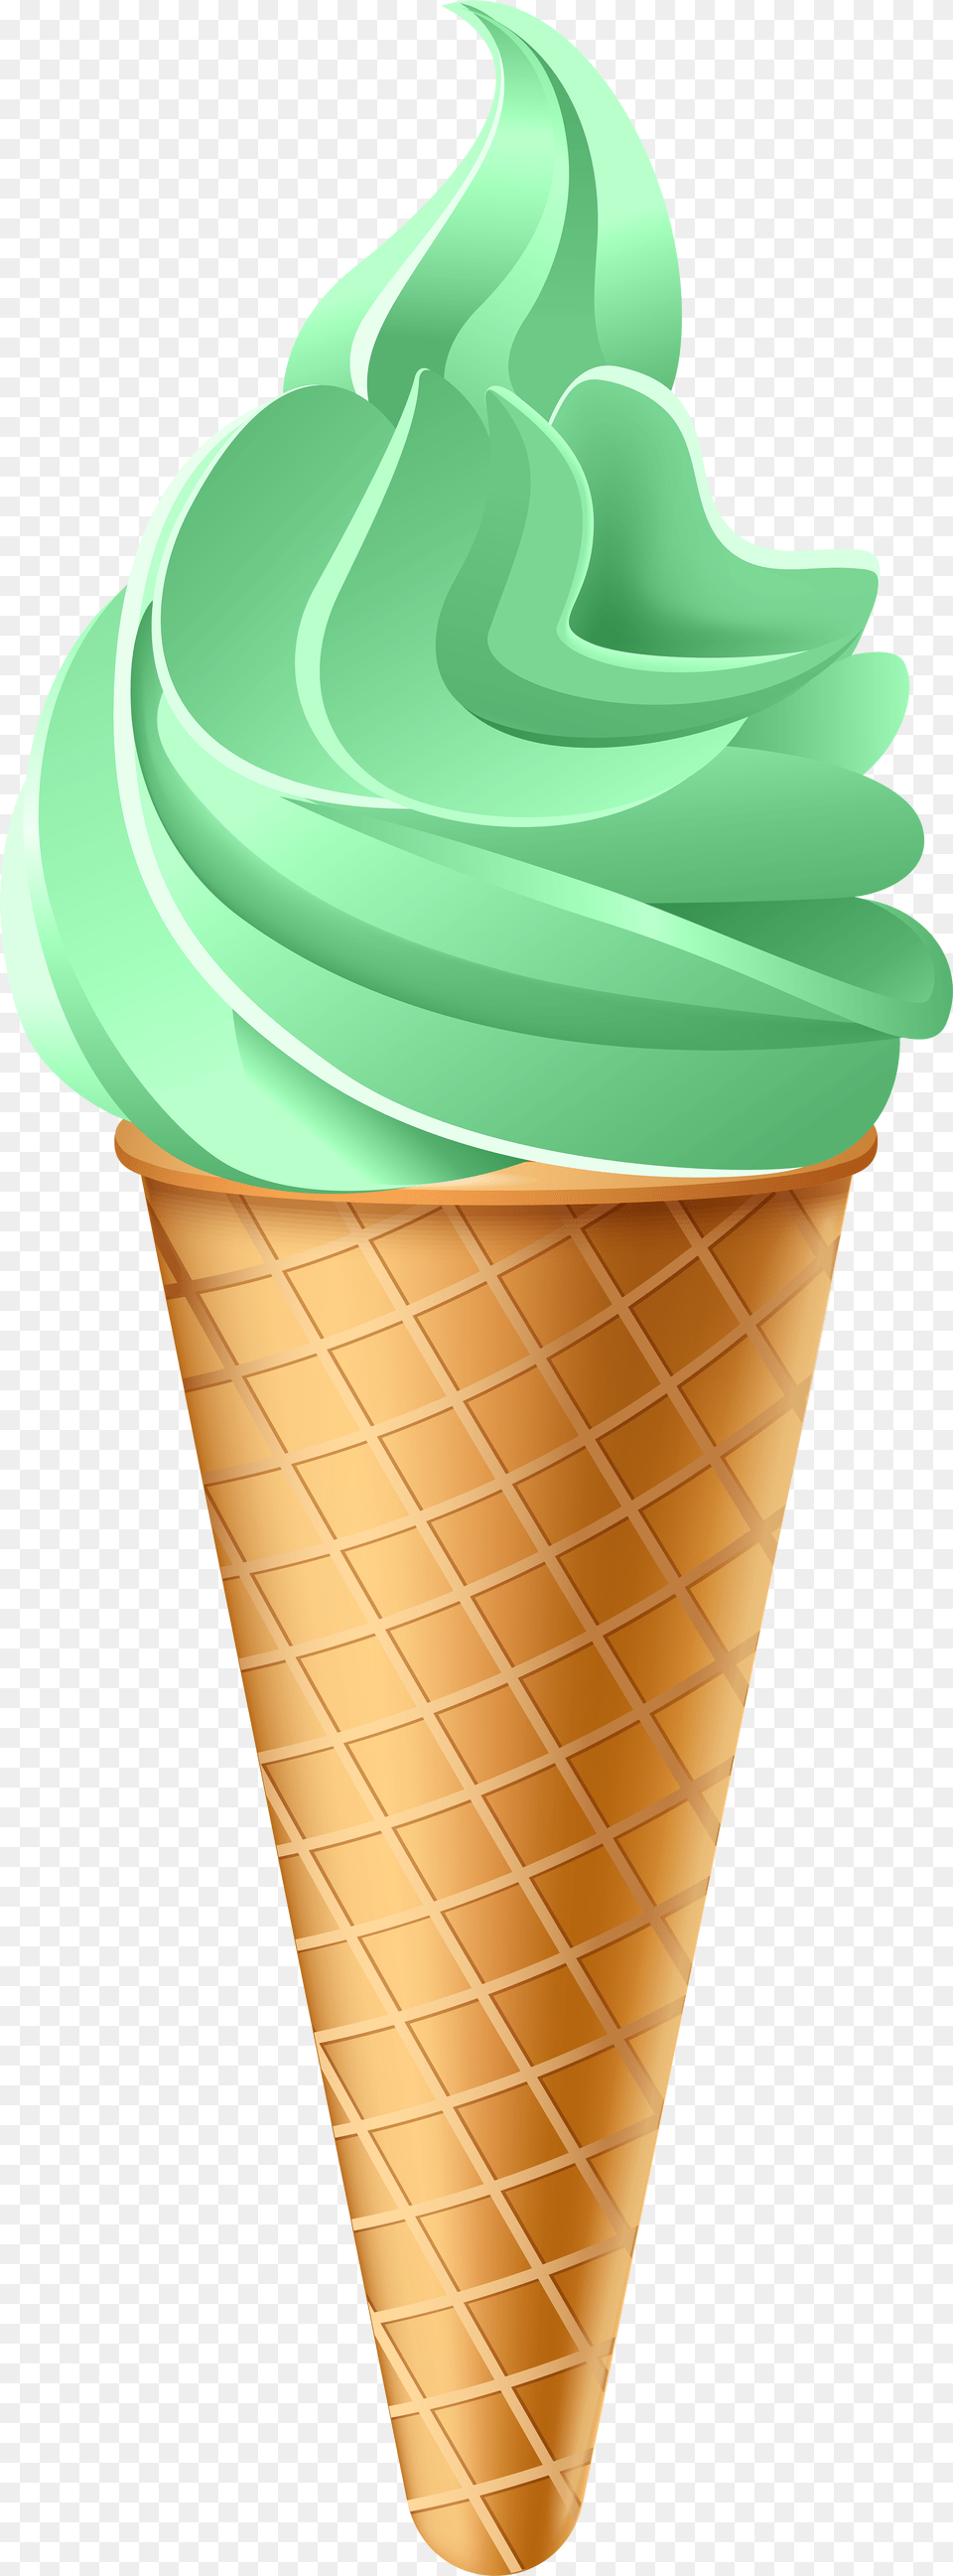 Mint Ice Cream Mint Ice Cream Clipart, Dessert, Food, Ice Cream, Soft Serve Ice Cream Png Image